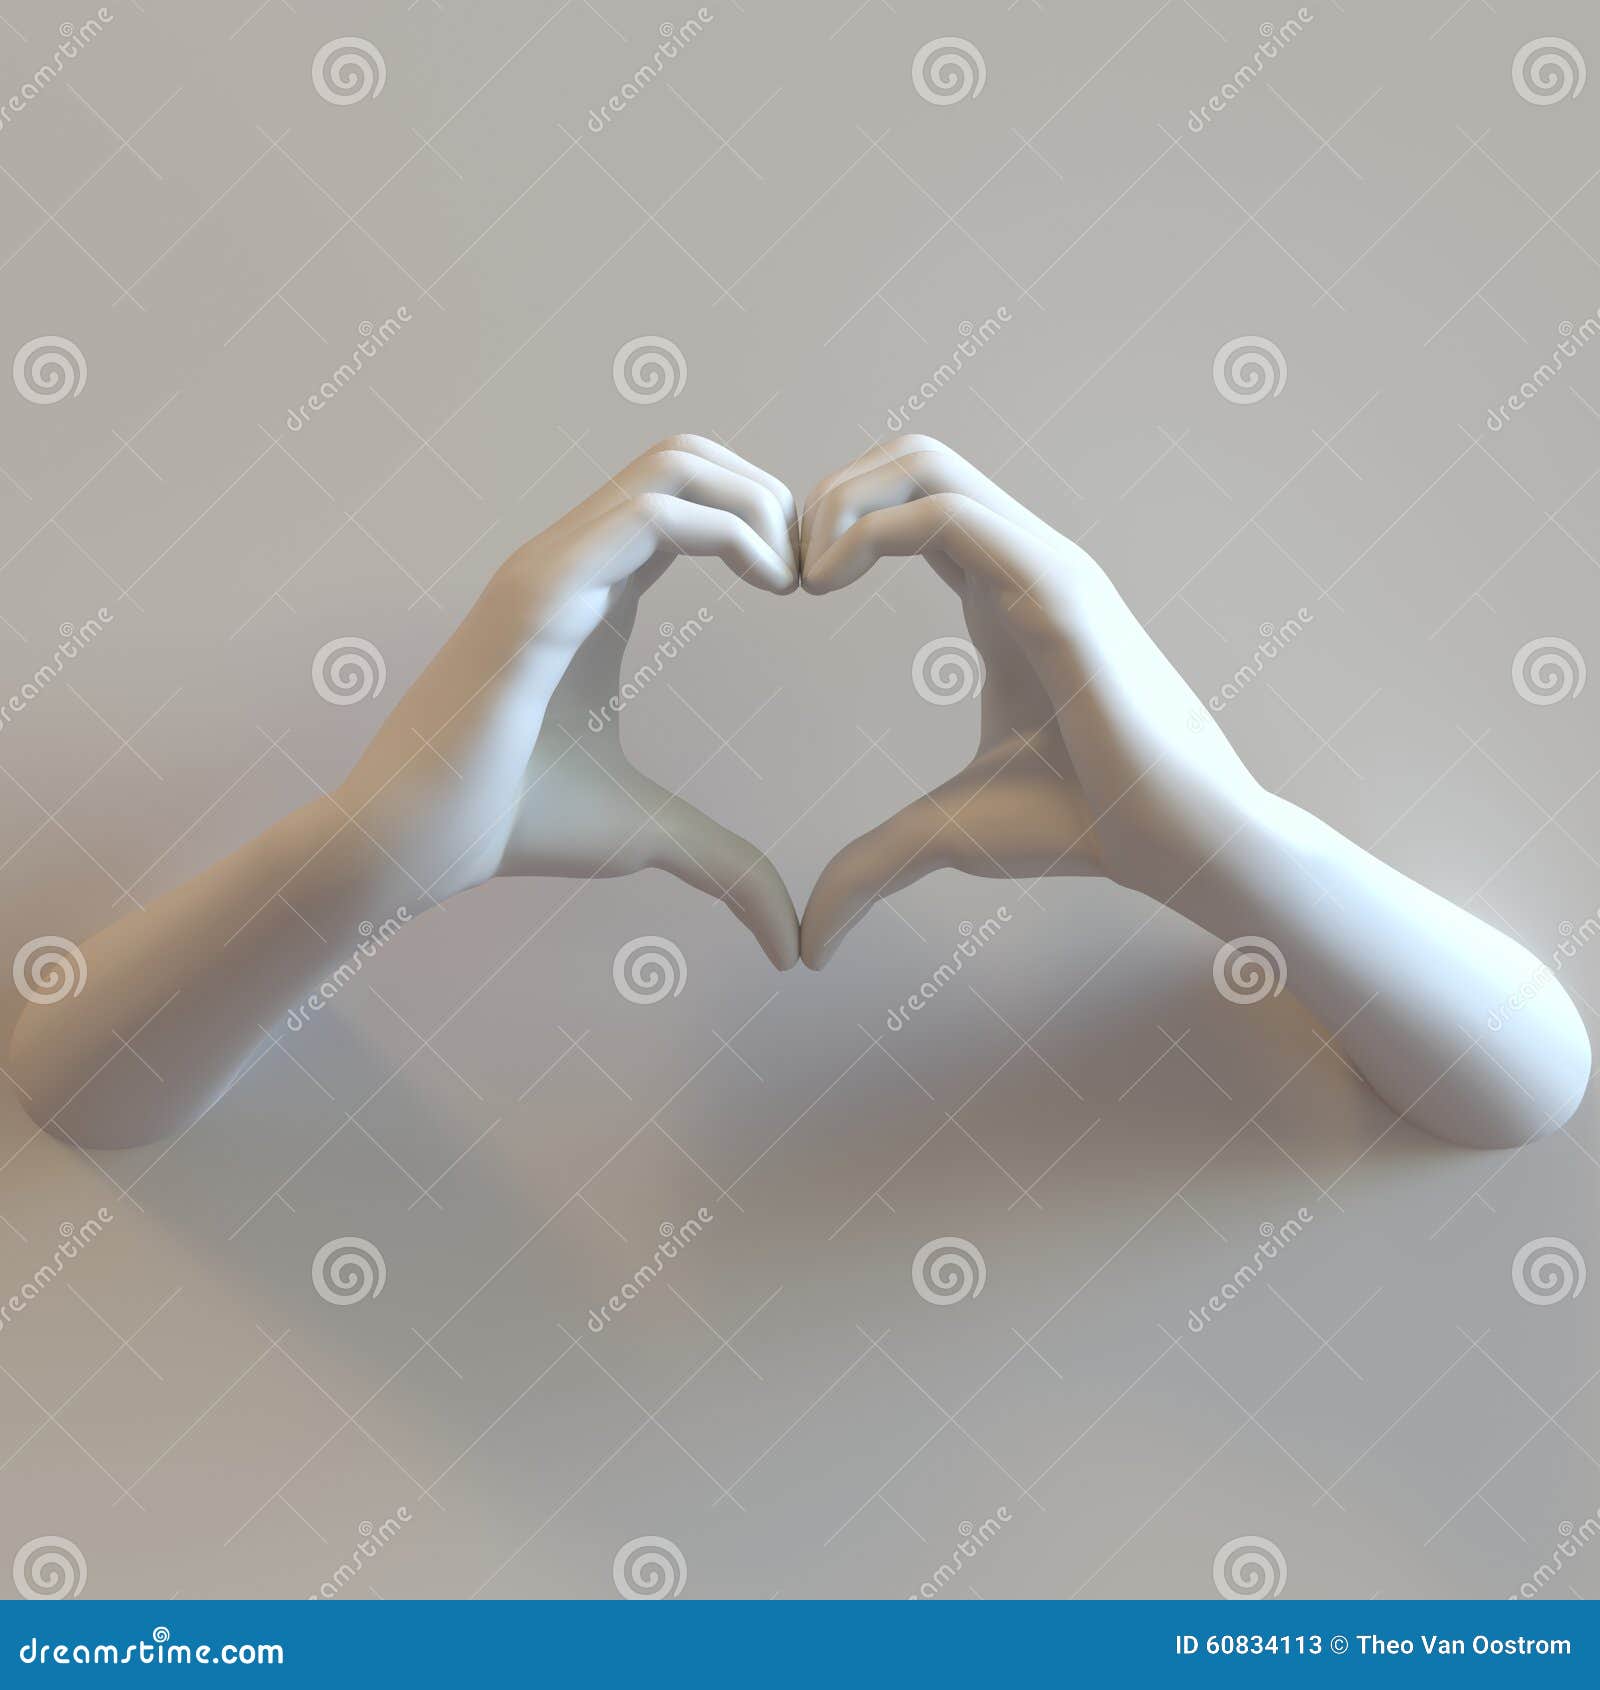 Hand Pose Image Illustration Making Heart Stock Vector (Royalty Free)  1423810526 | Shutterstock